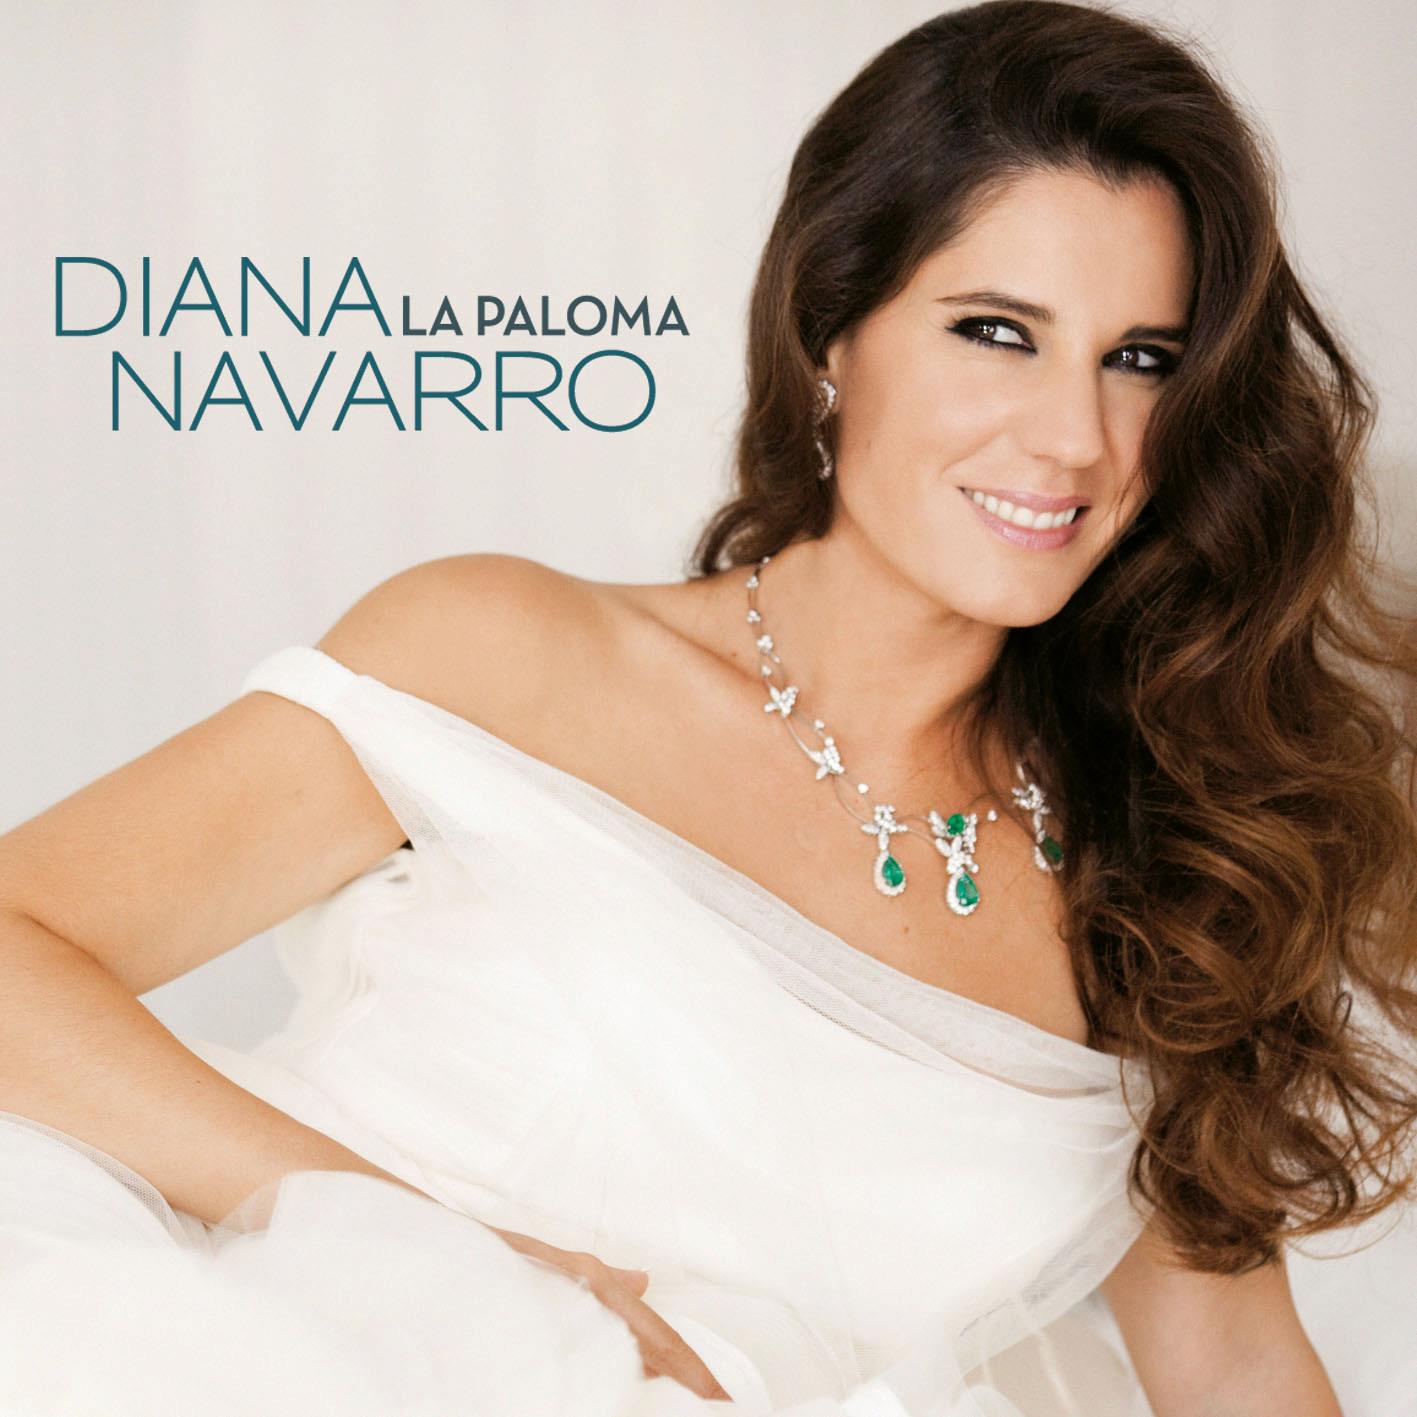 Escucha «La Paloma» el nuevo single de Diana Navarro